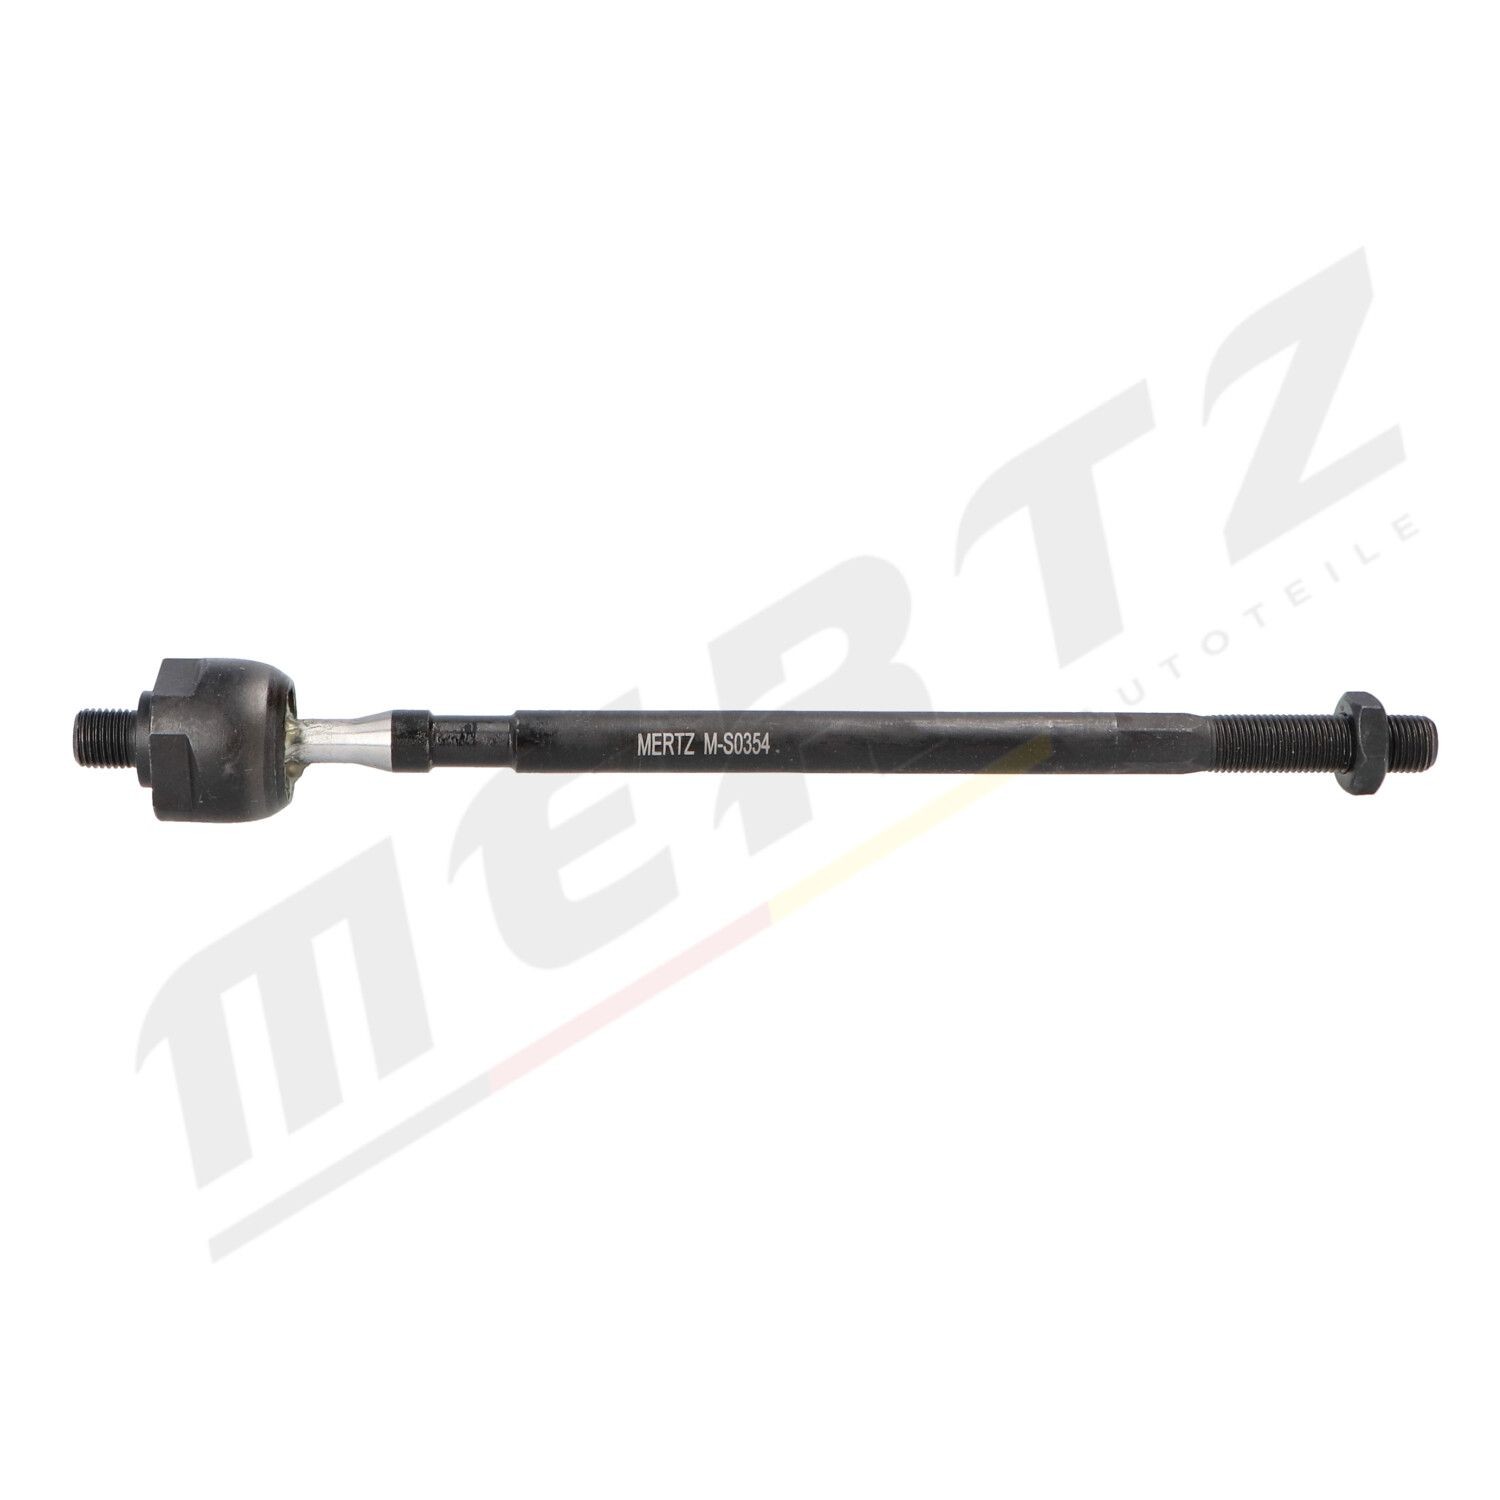 MERTZ Front Axle Left, Front Axle Right, 296 mm Length: 296mm Tie rod axle joint M-S0354 buy